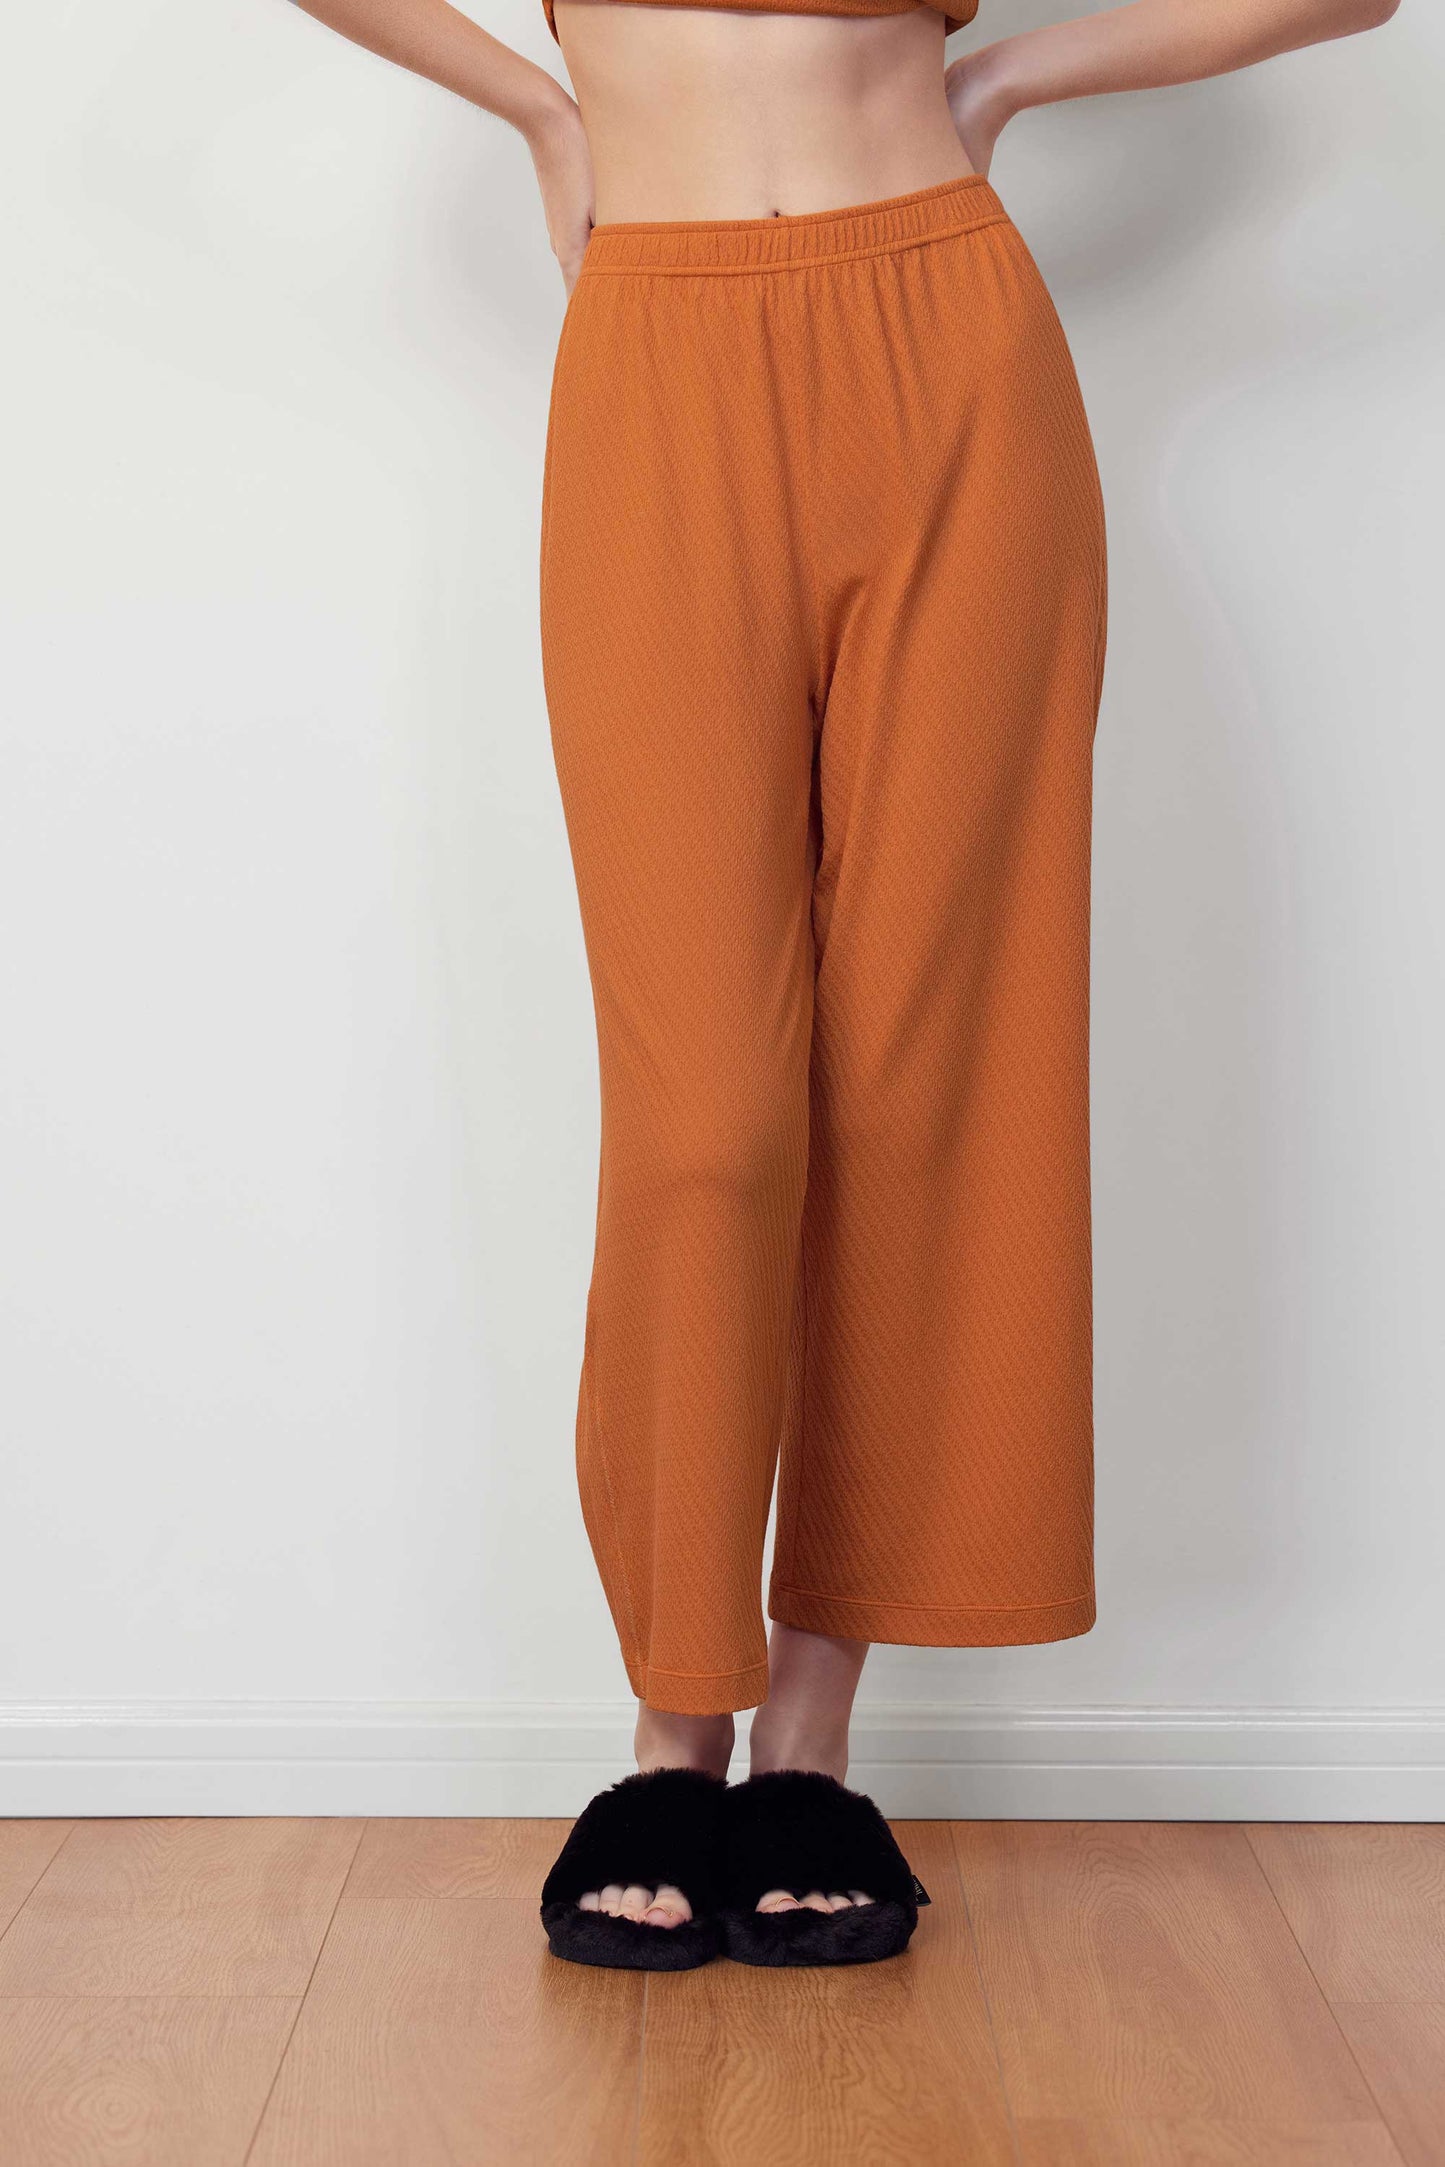 woman in orange pants